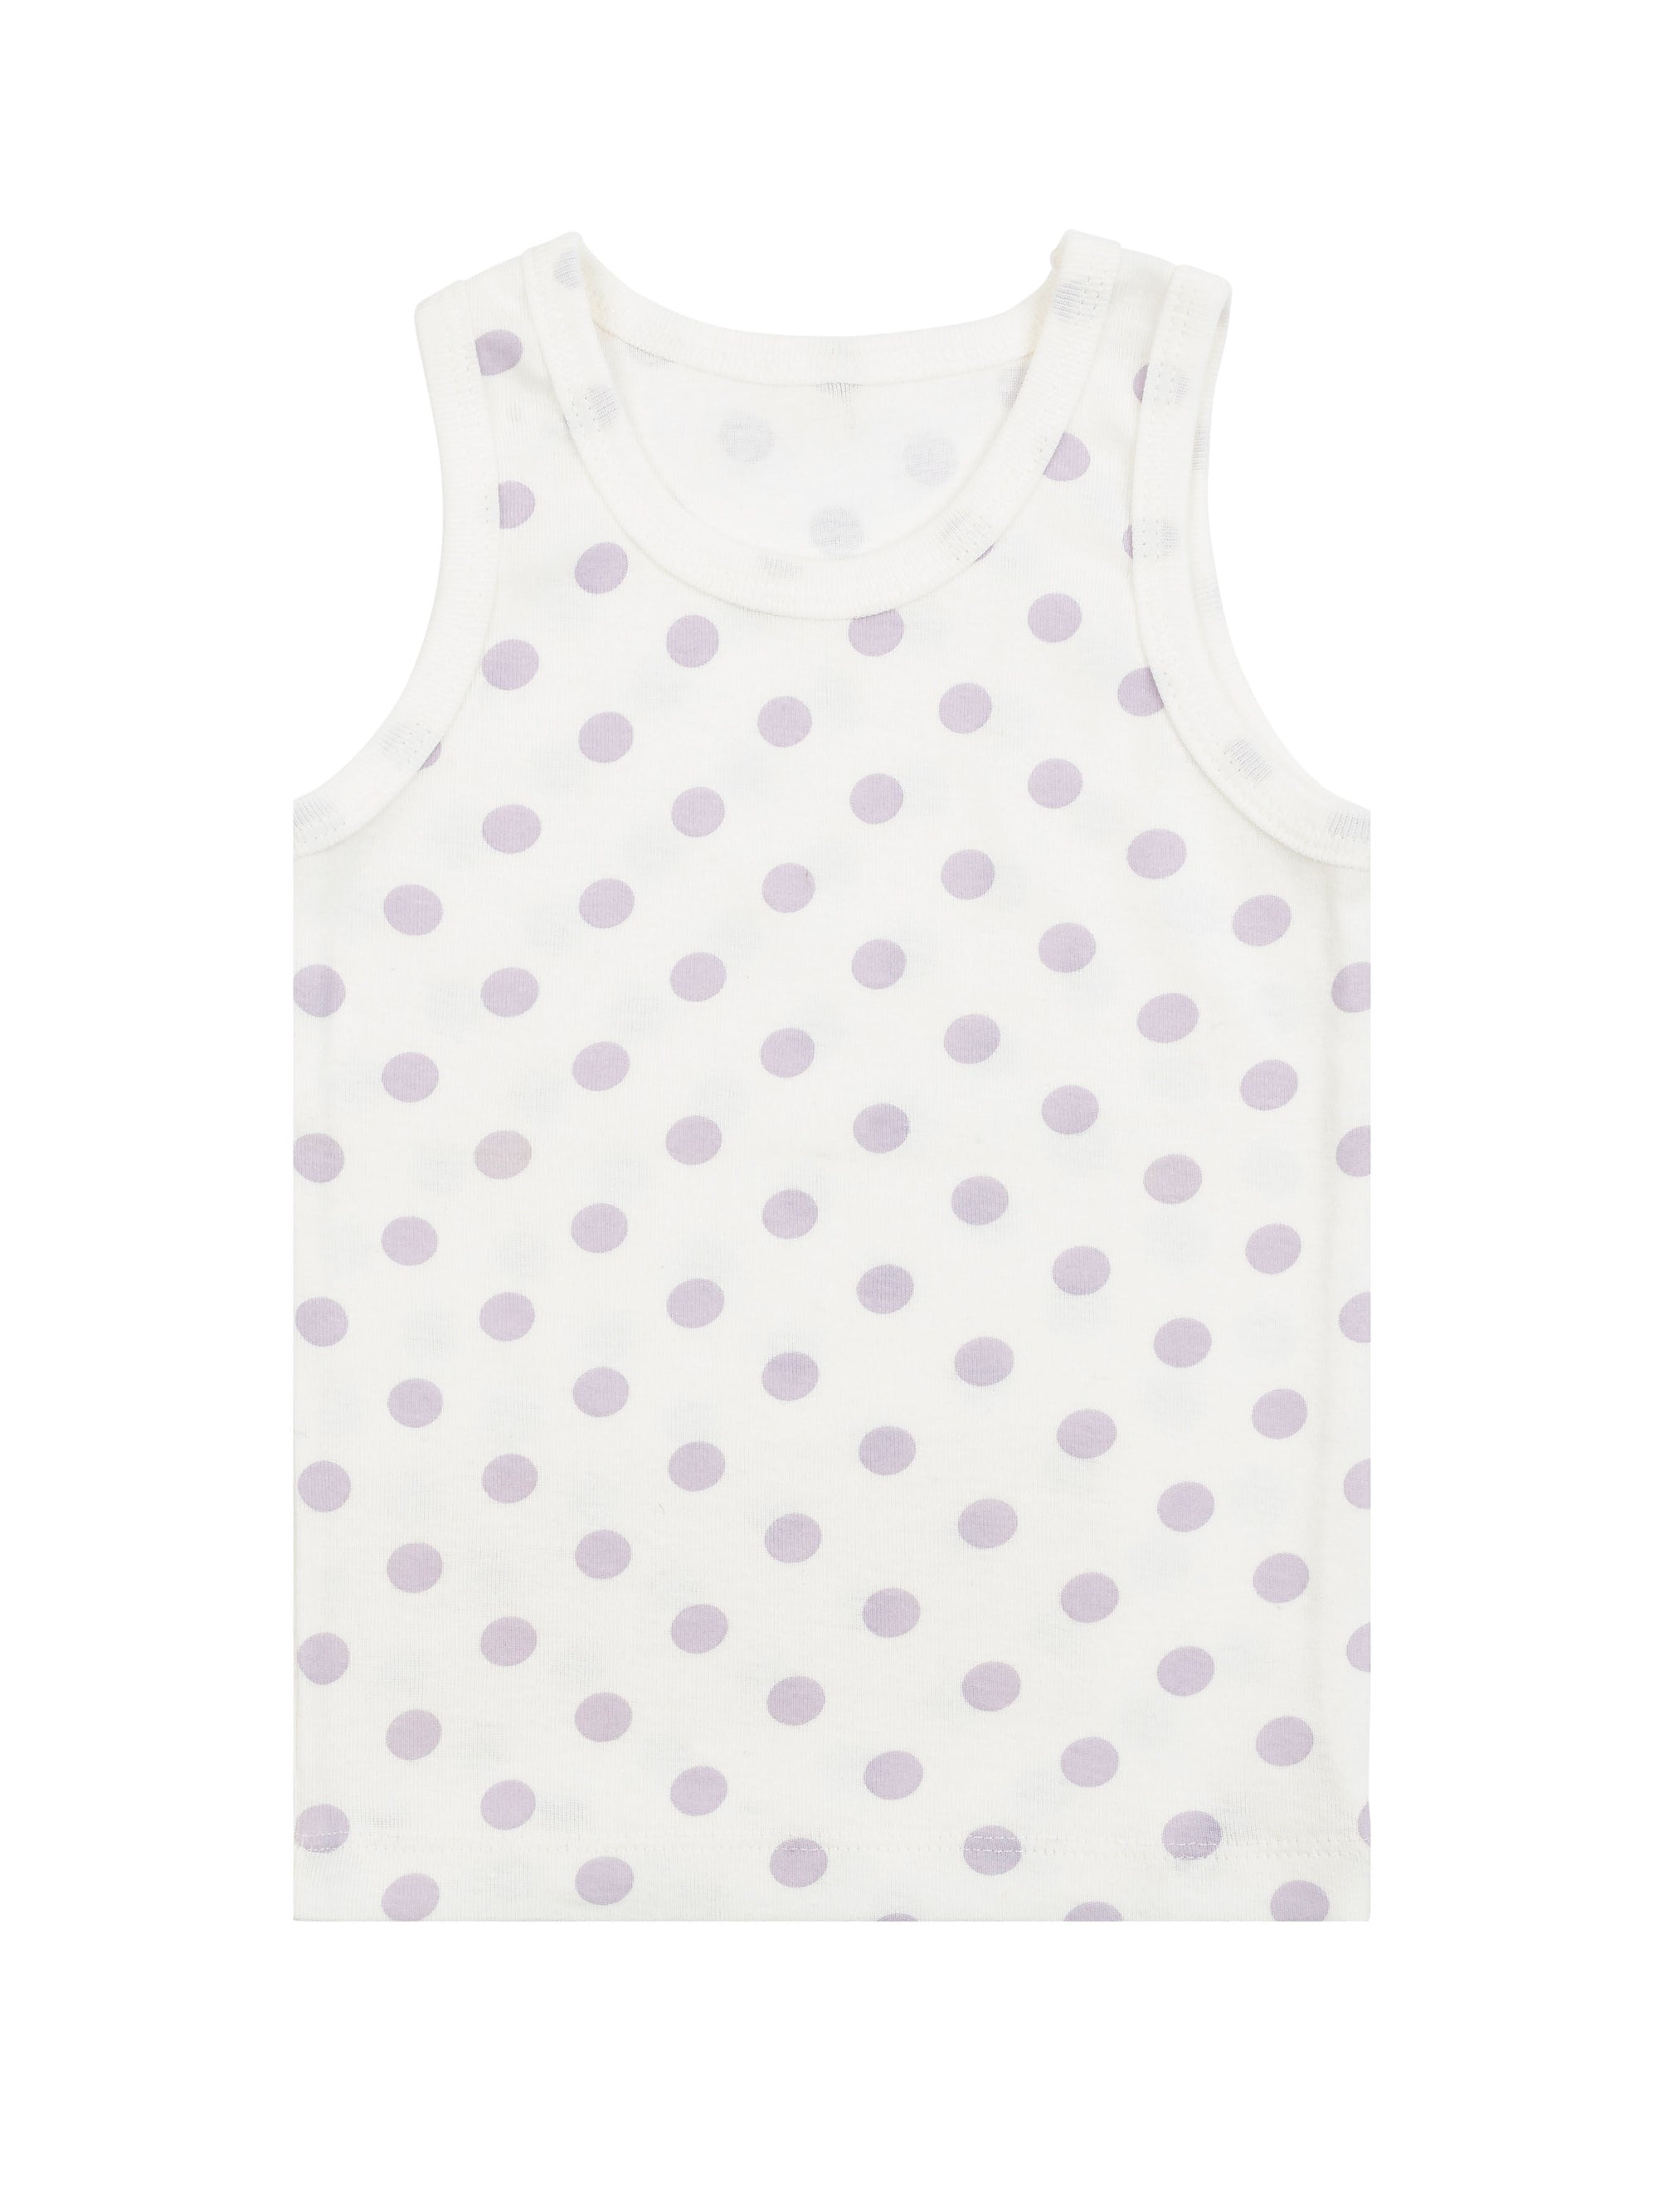 Girl's Undershirt/Tank Top - Lavender Dot